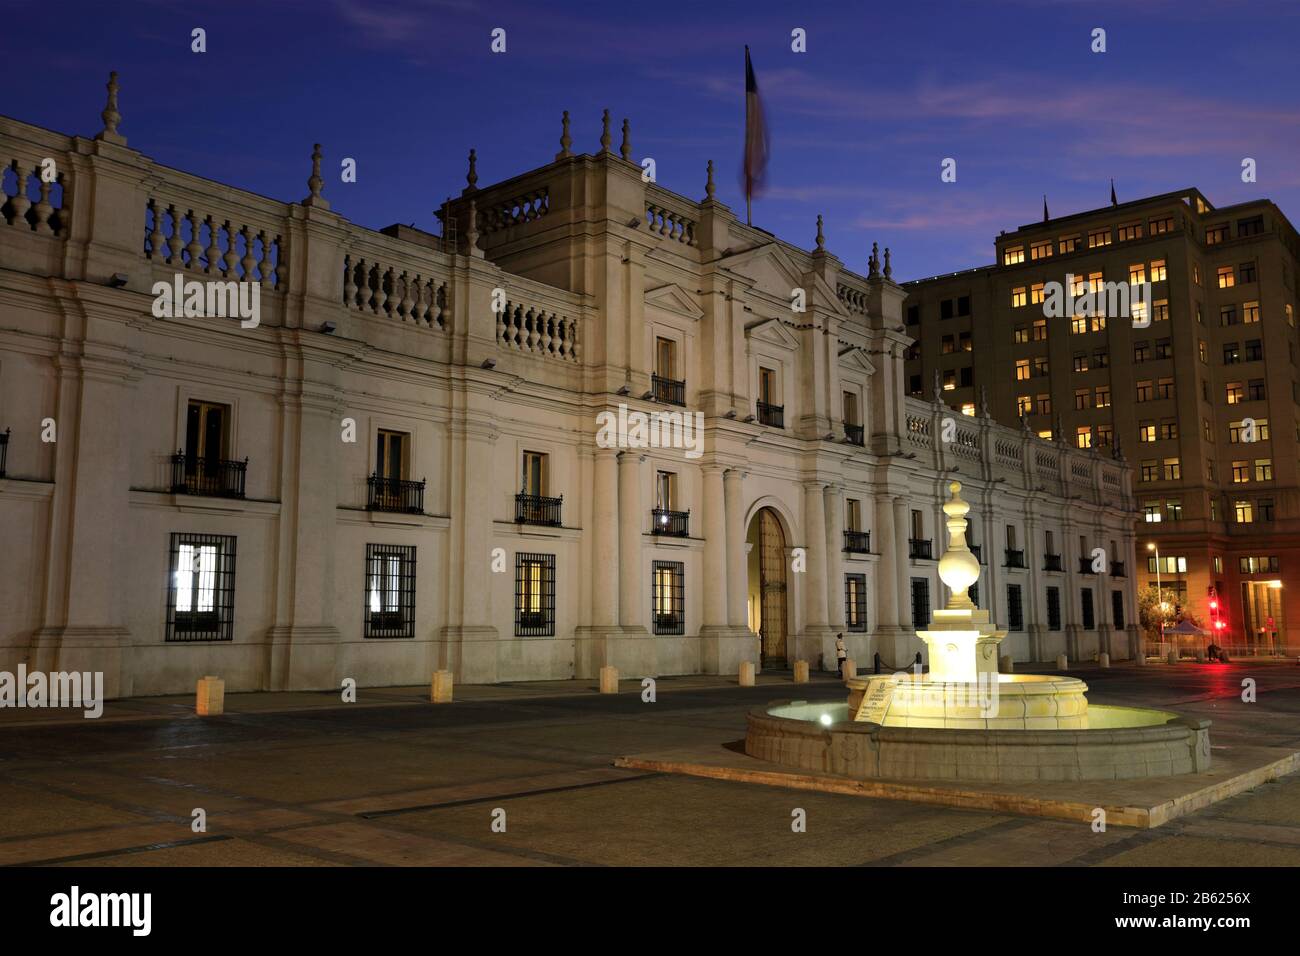 the-moneda-palace-at-night-region-metropolitana-santiago-city-chile-2B6256X.jpg